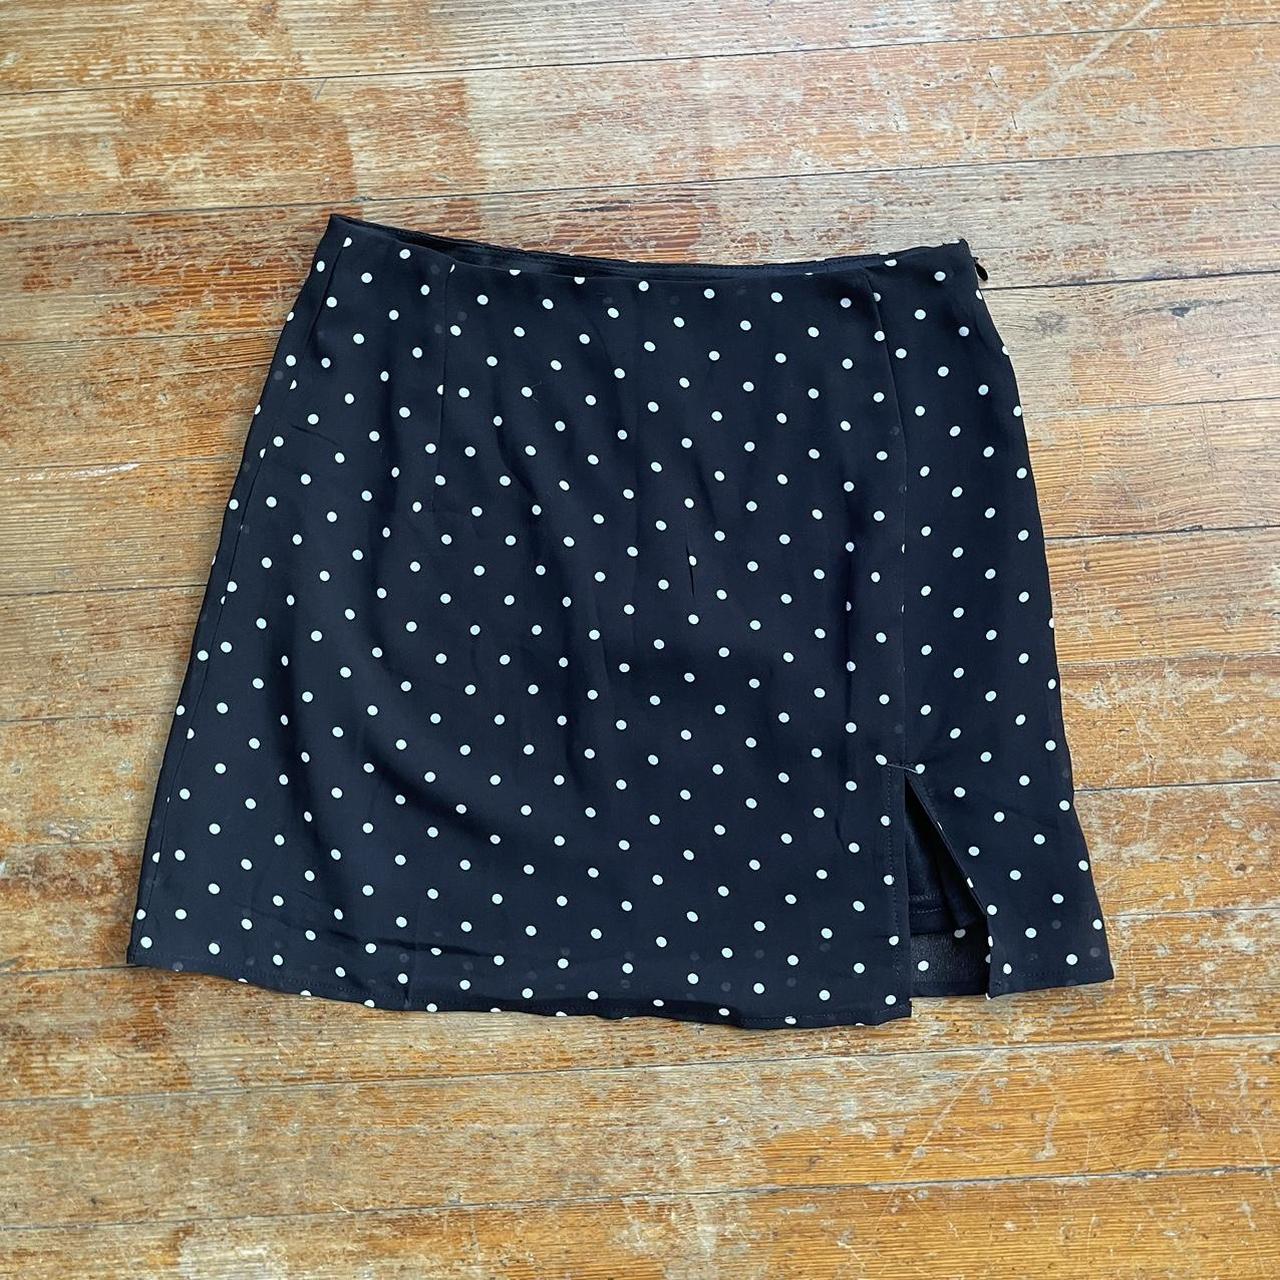 Cute lil black and white polka dot mini skirt with a... - Depop